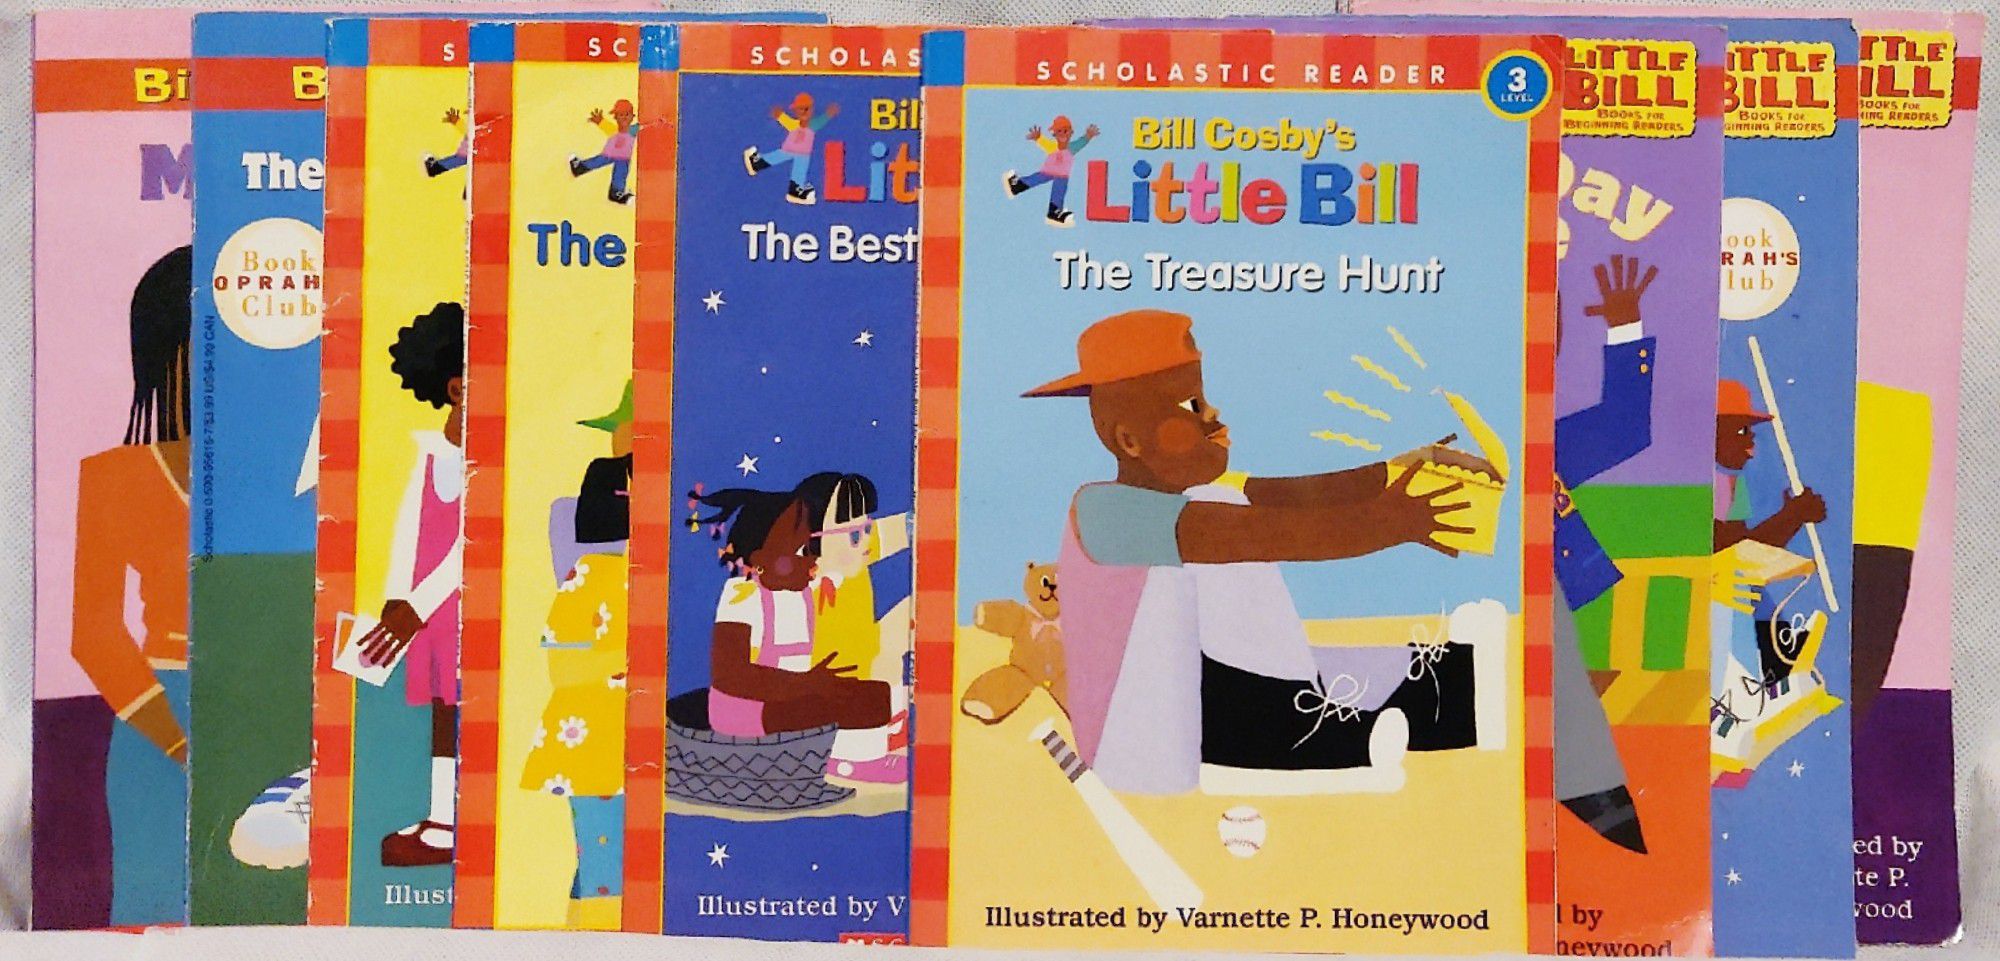 Little Bill Nick Jr Series Scholastic Books Collection 12 paperbacks 3 hardbacks